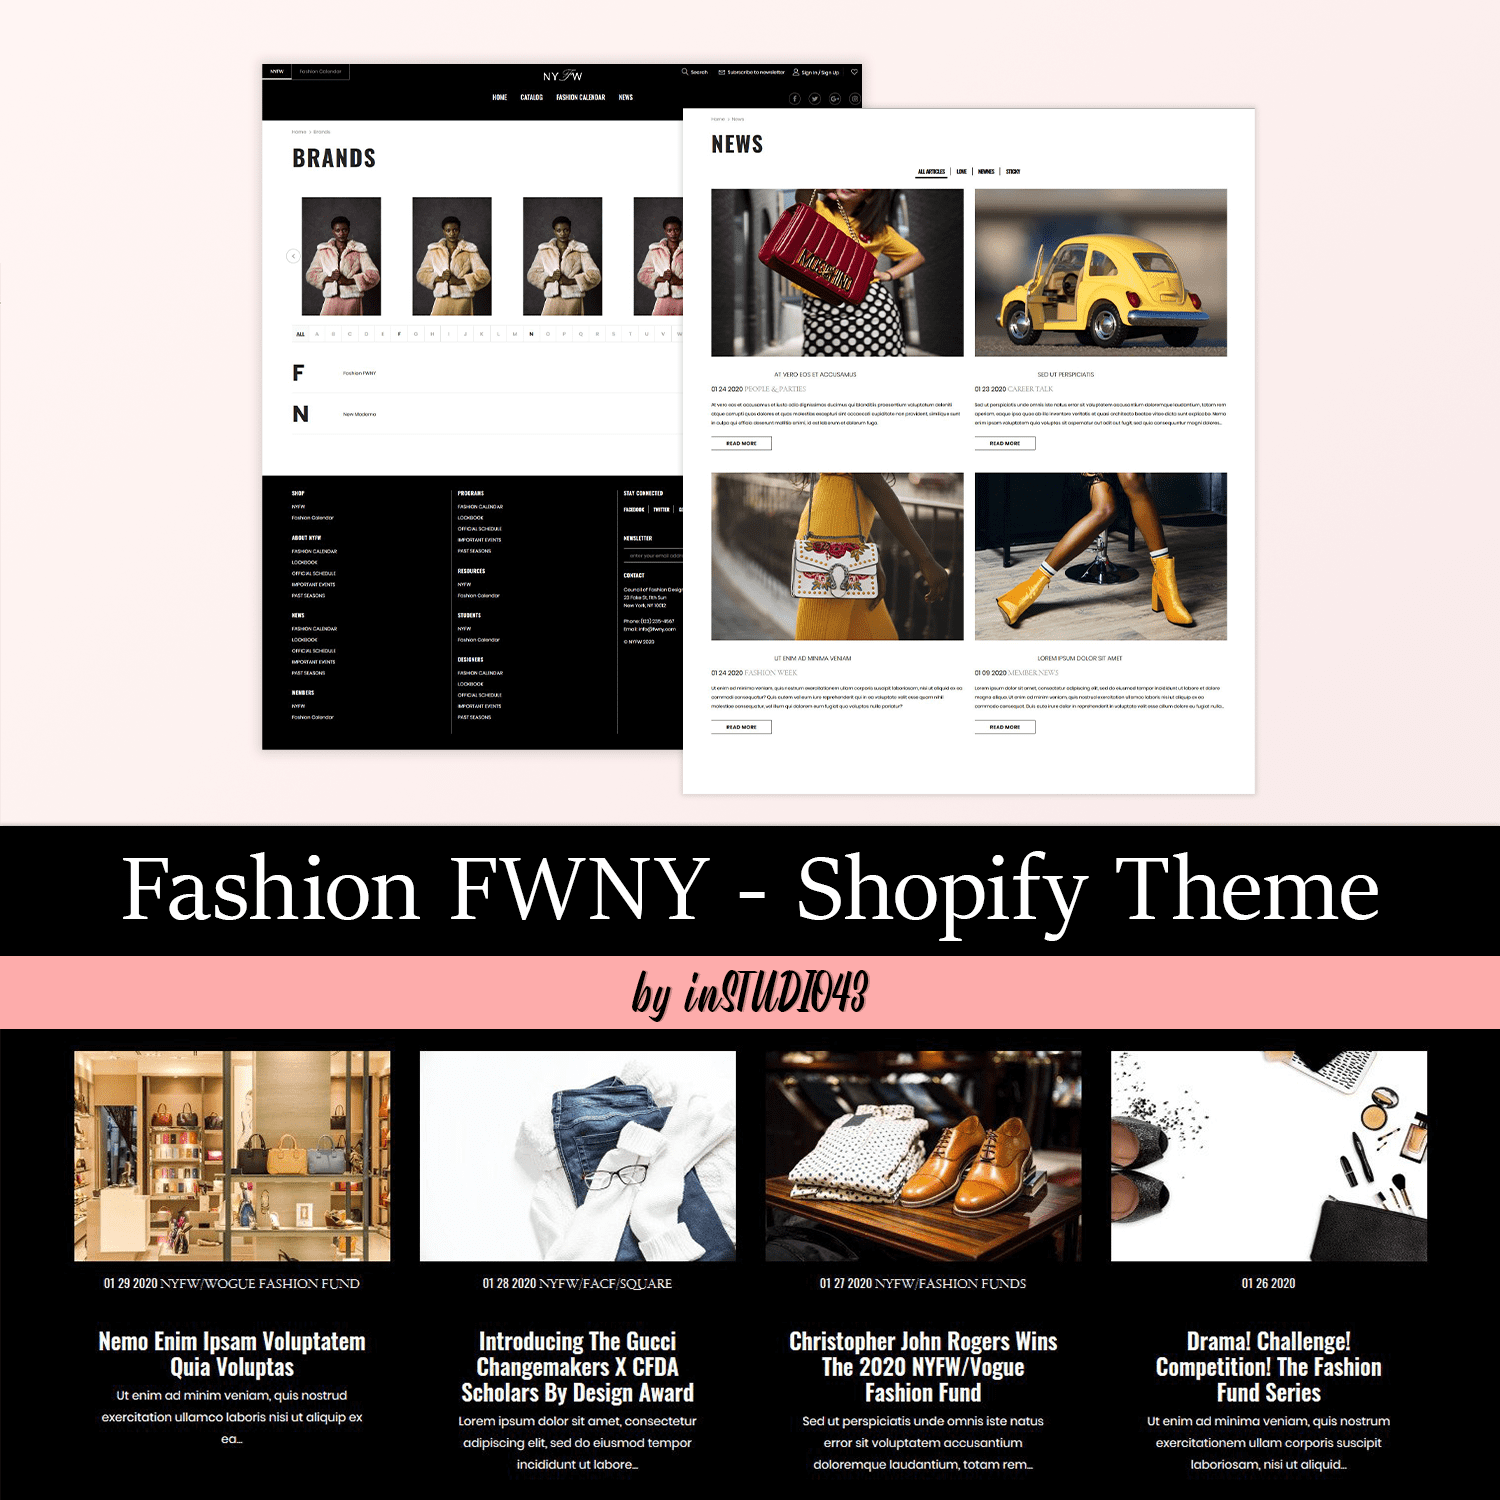 Fashion FWNY - Shopify Theme cover.